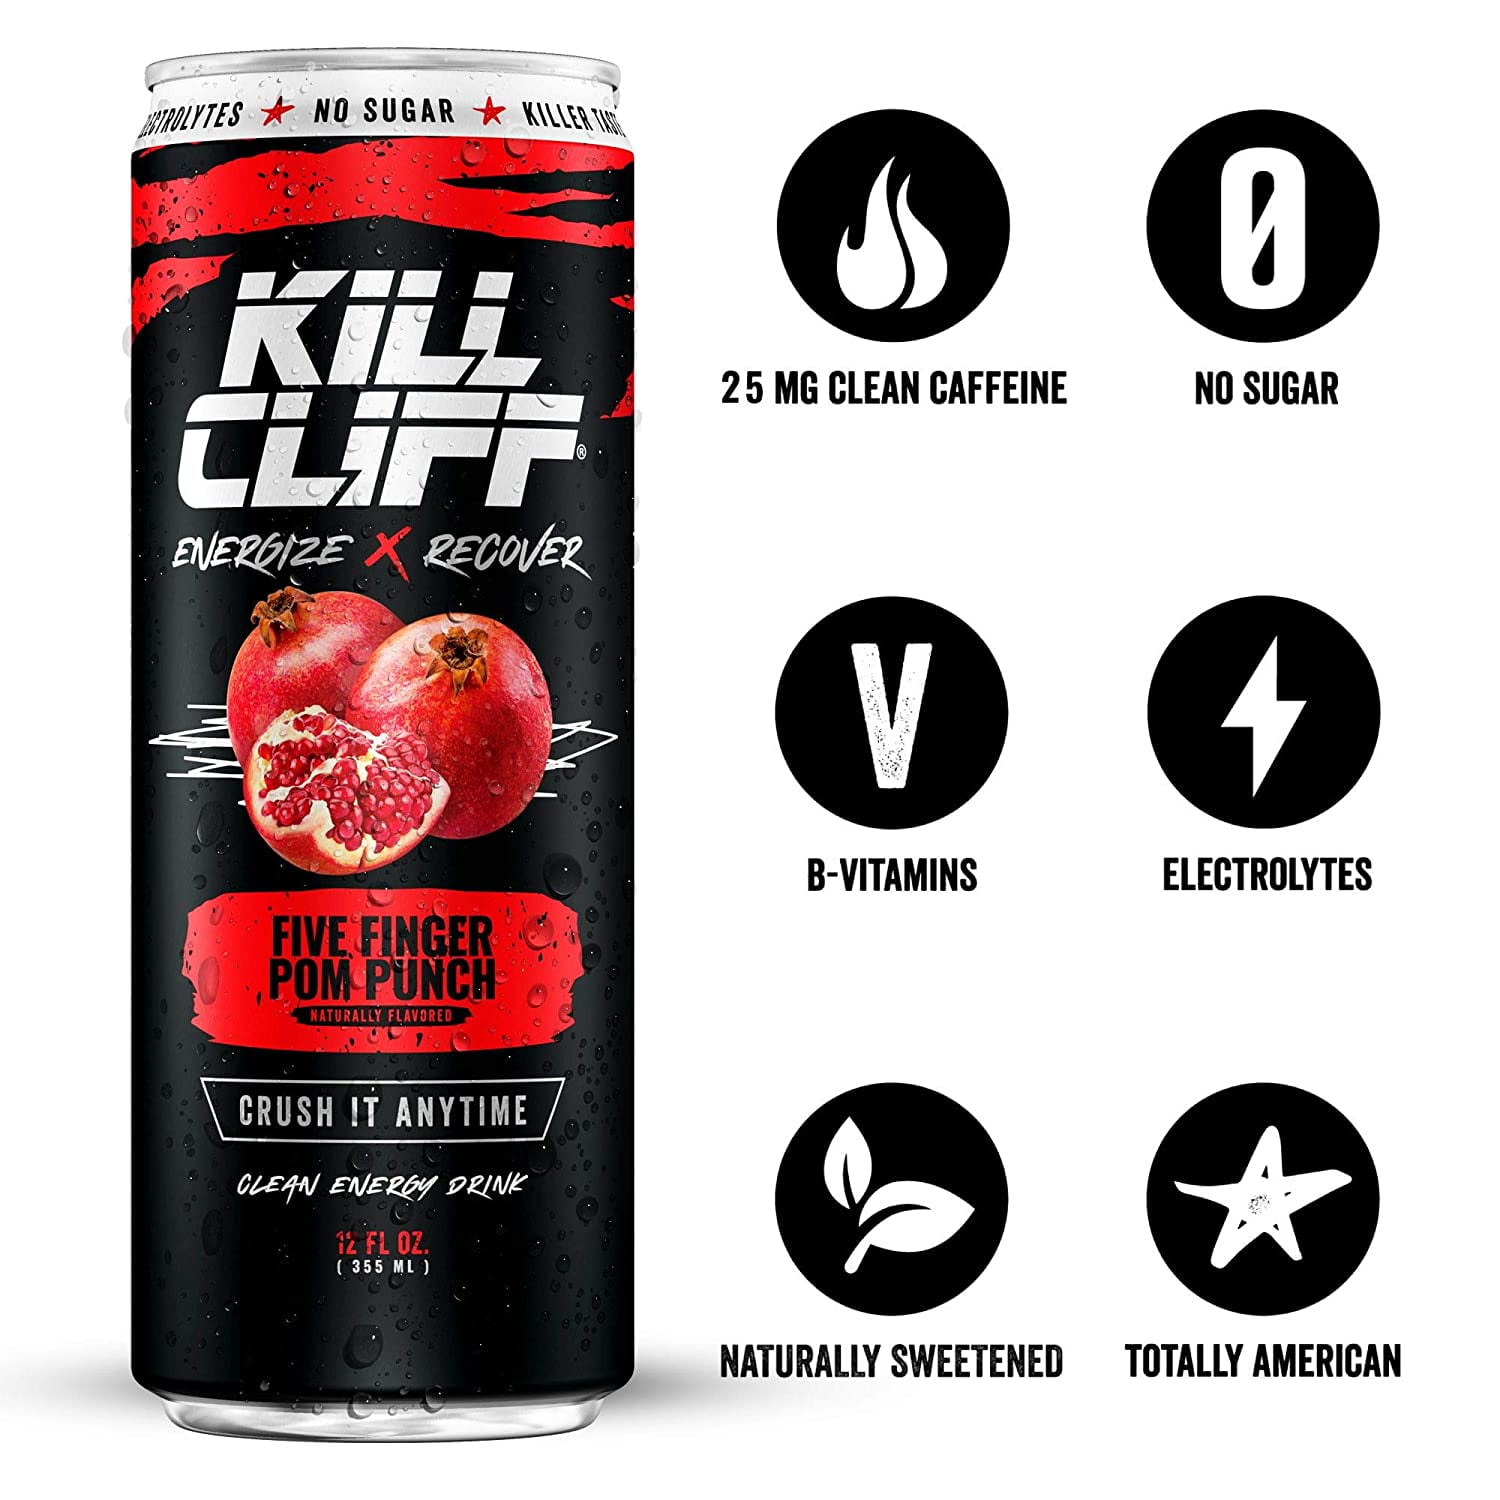 Do Rockstar Energy Drinks Actually Work? – Kill Cliff